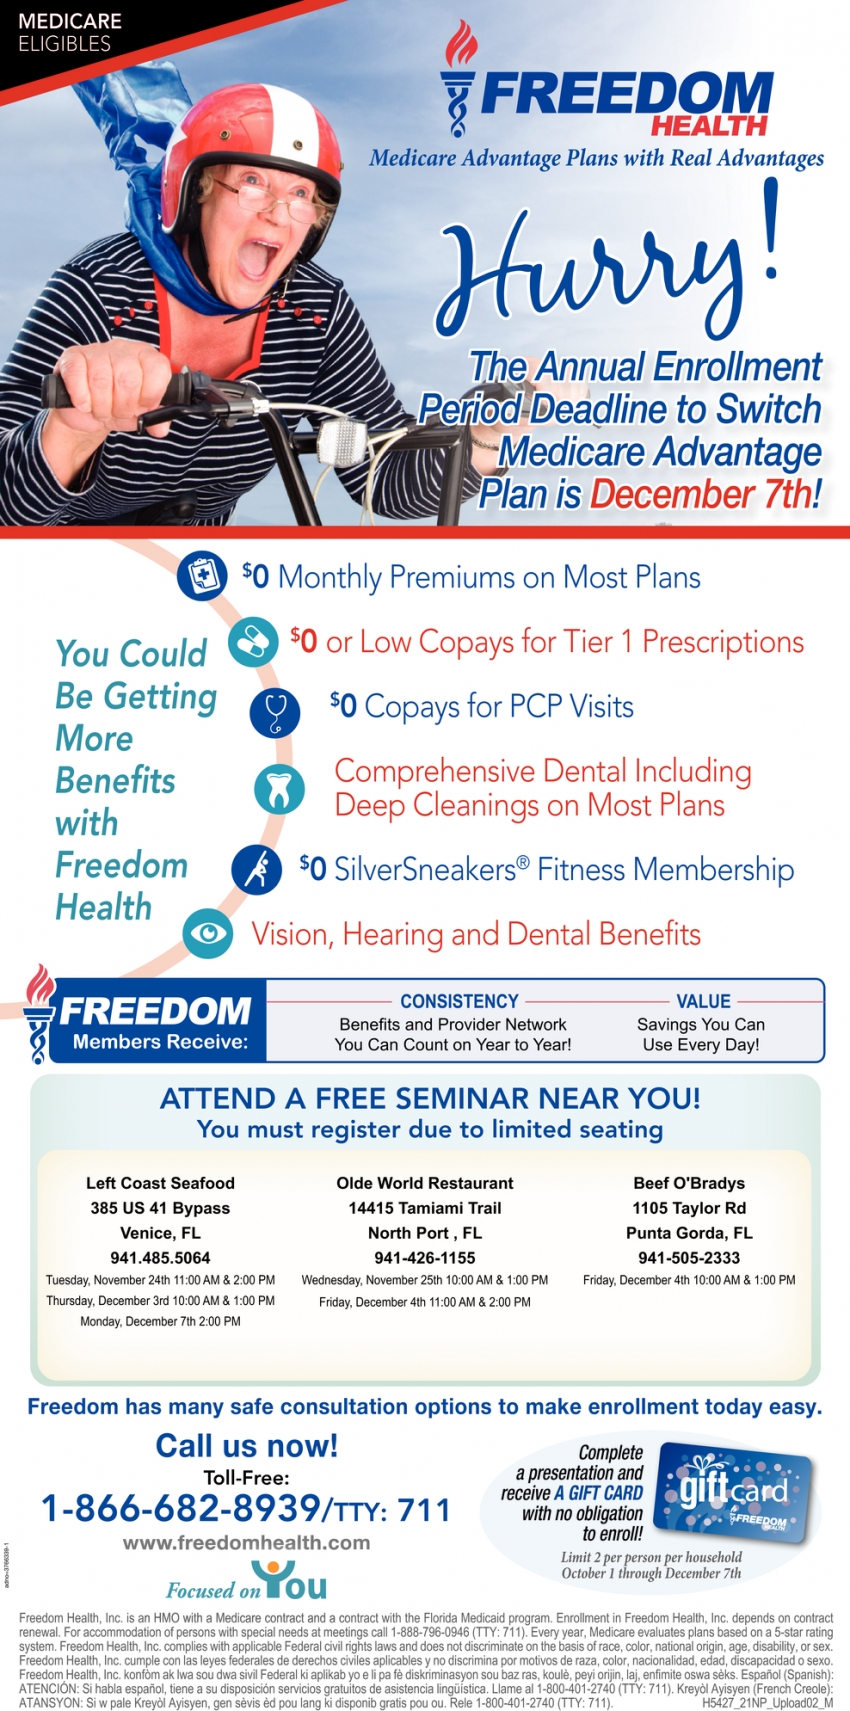 Attend a Free Seminar Near Your, Freedom Health Seminars (December 4